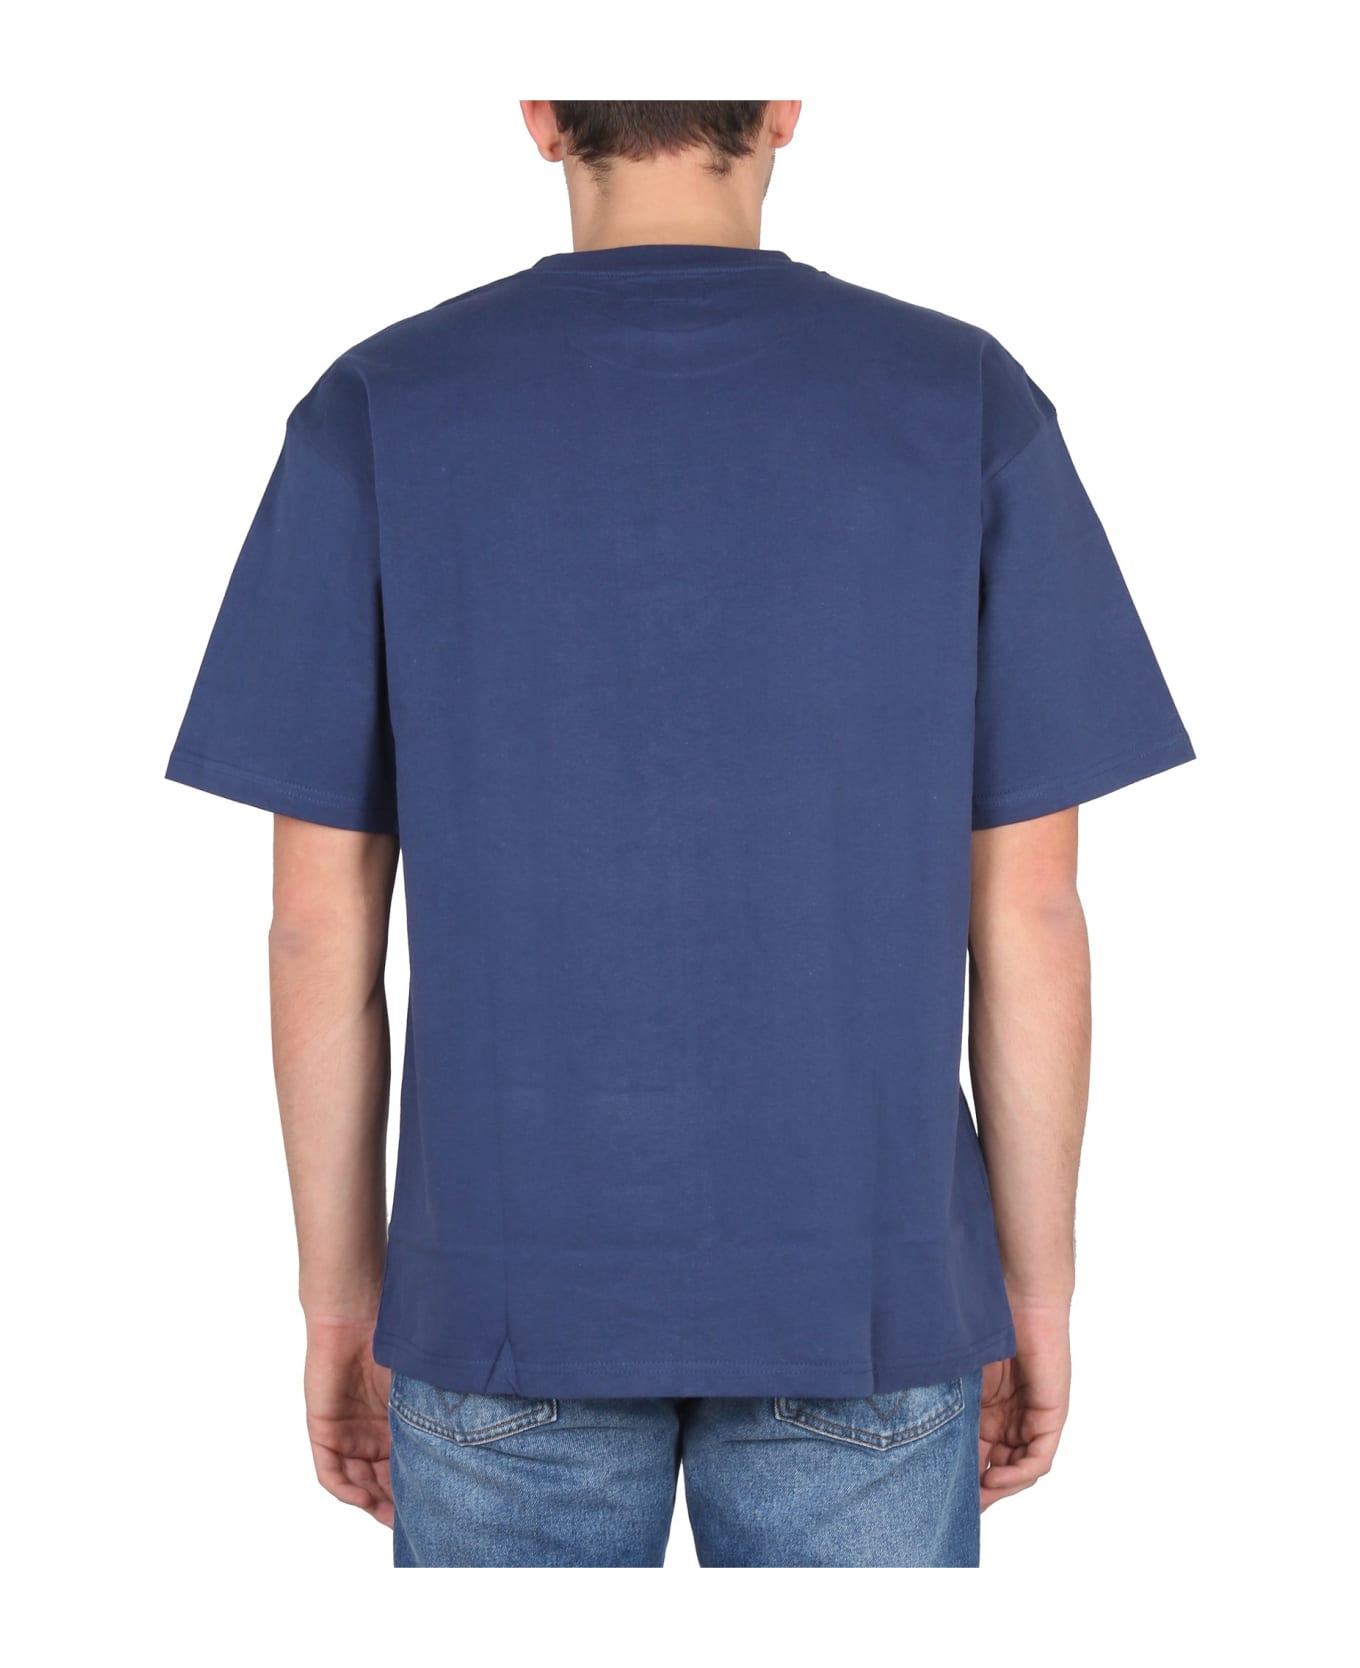 Market Crewneck T-shirt - BLU